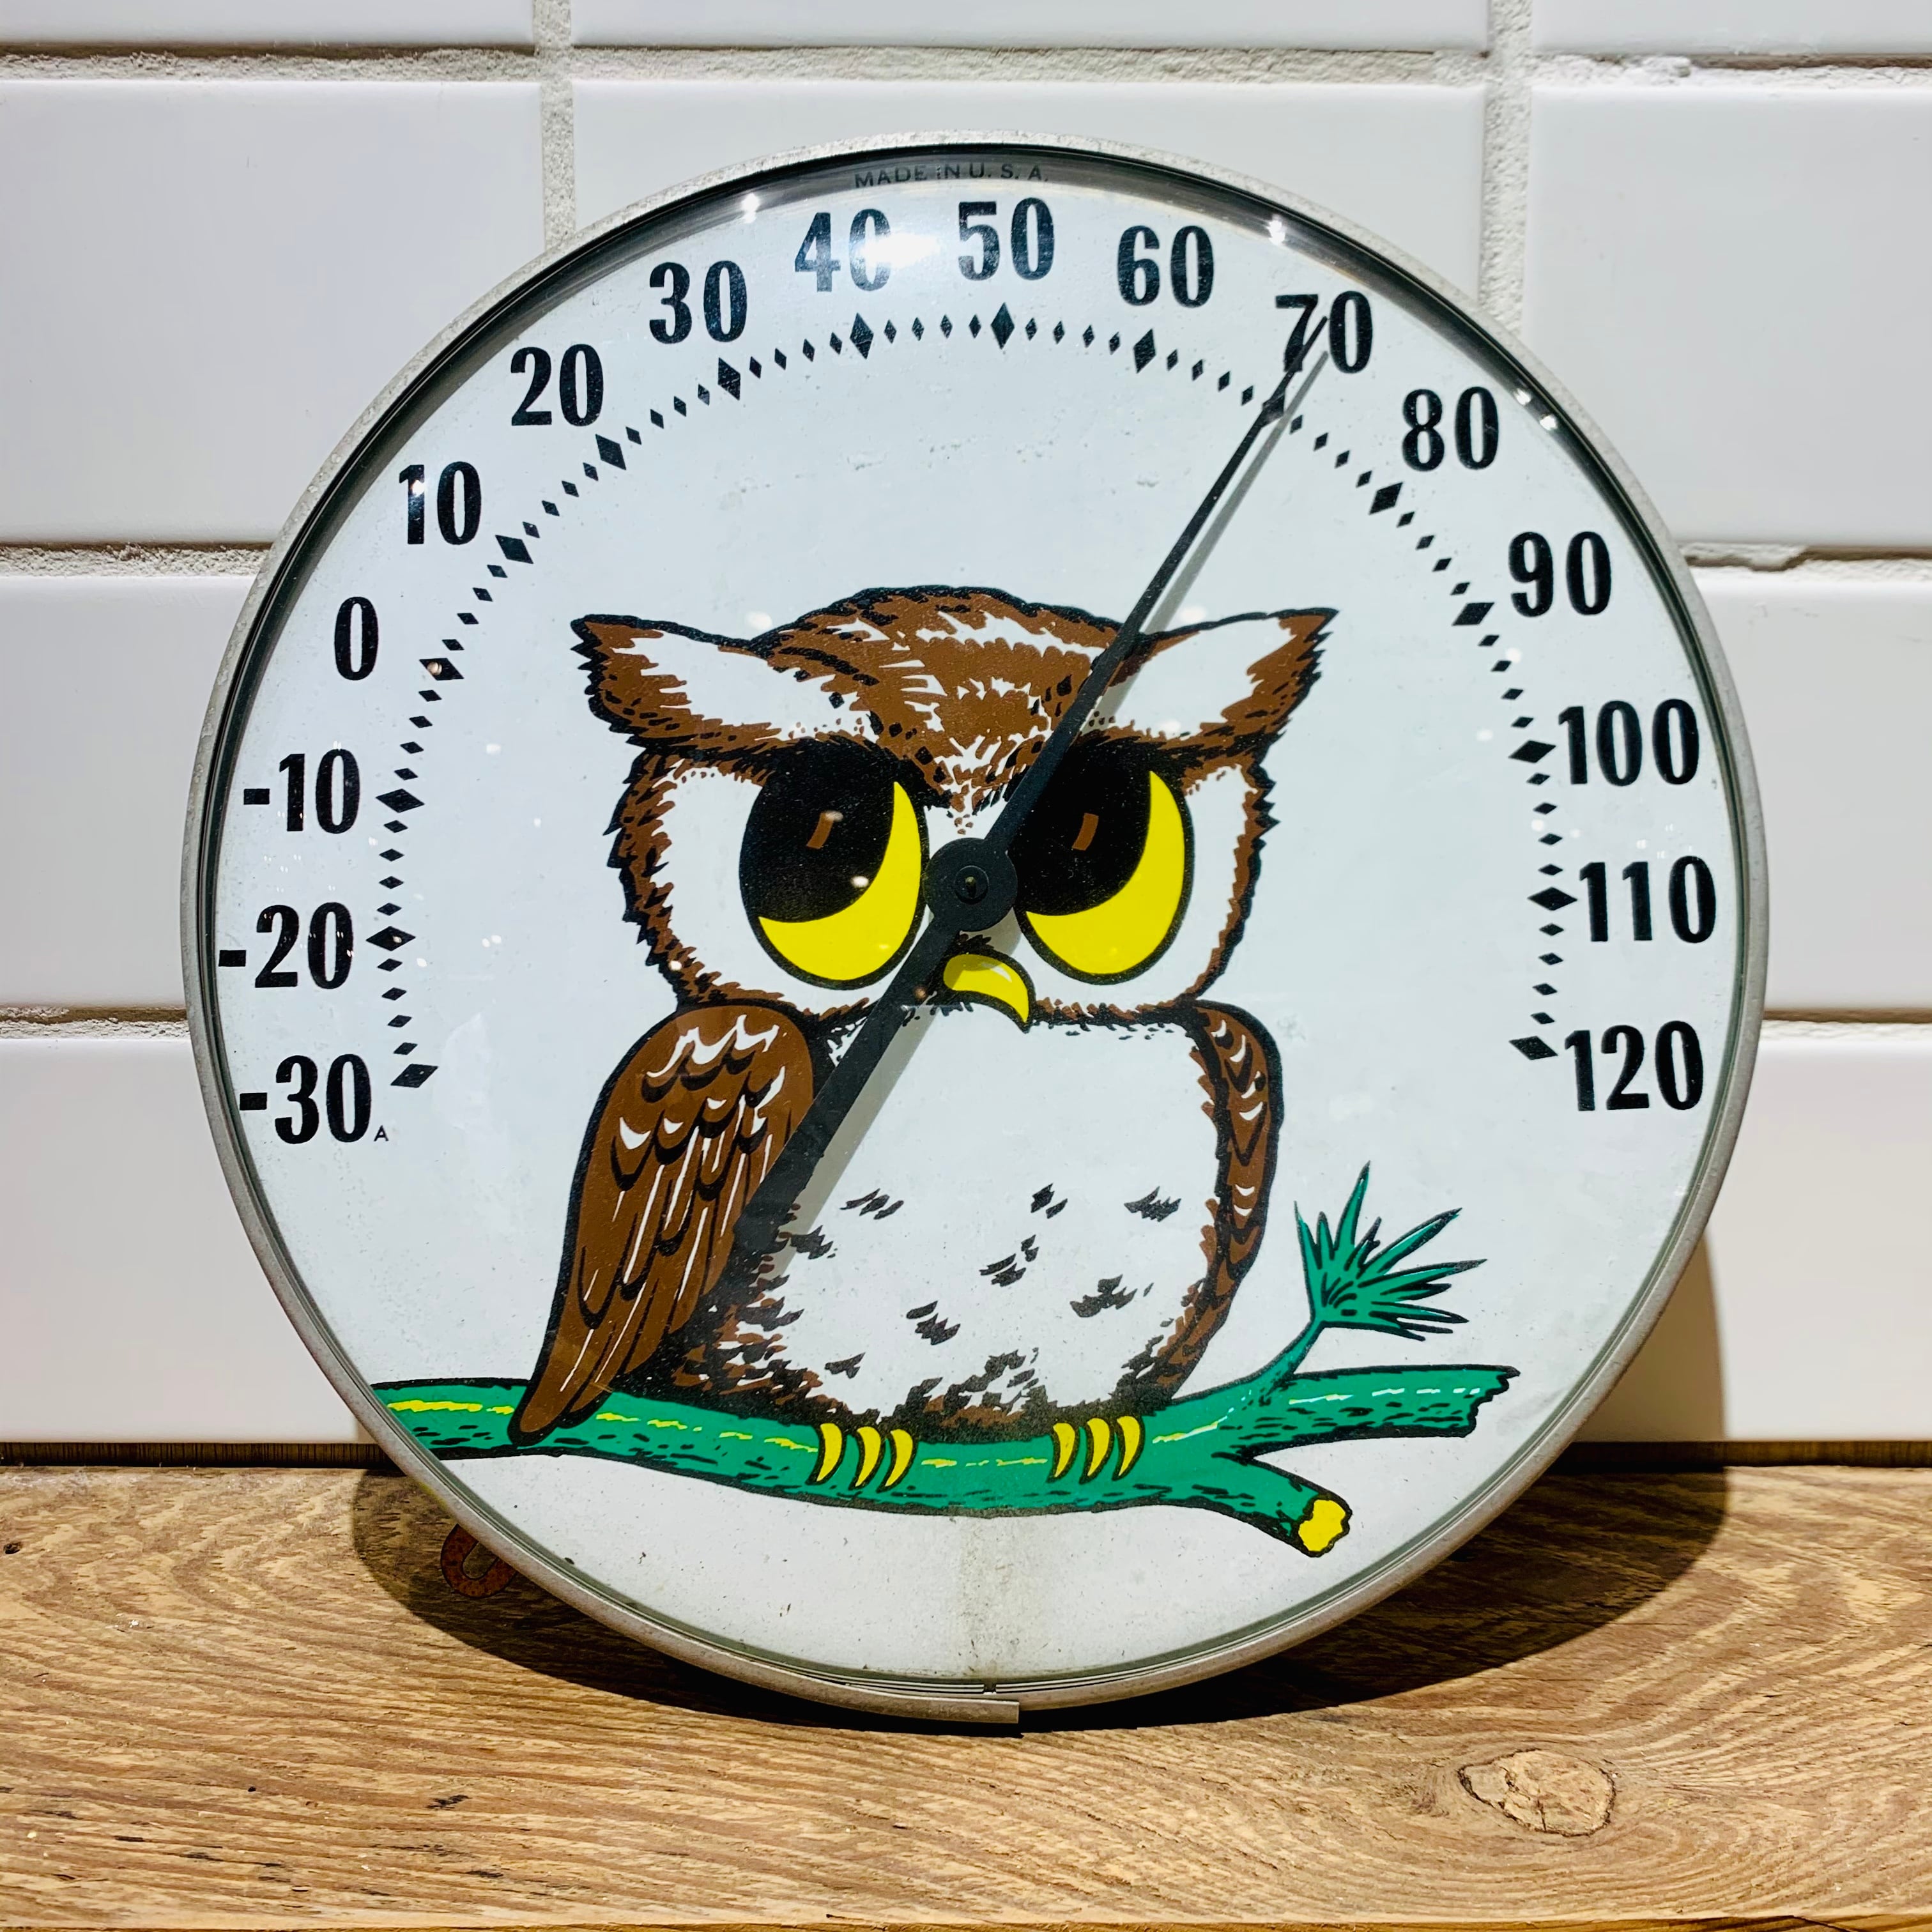 The Original Jumbo Dial “Owl” Thermometer